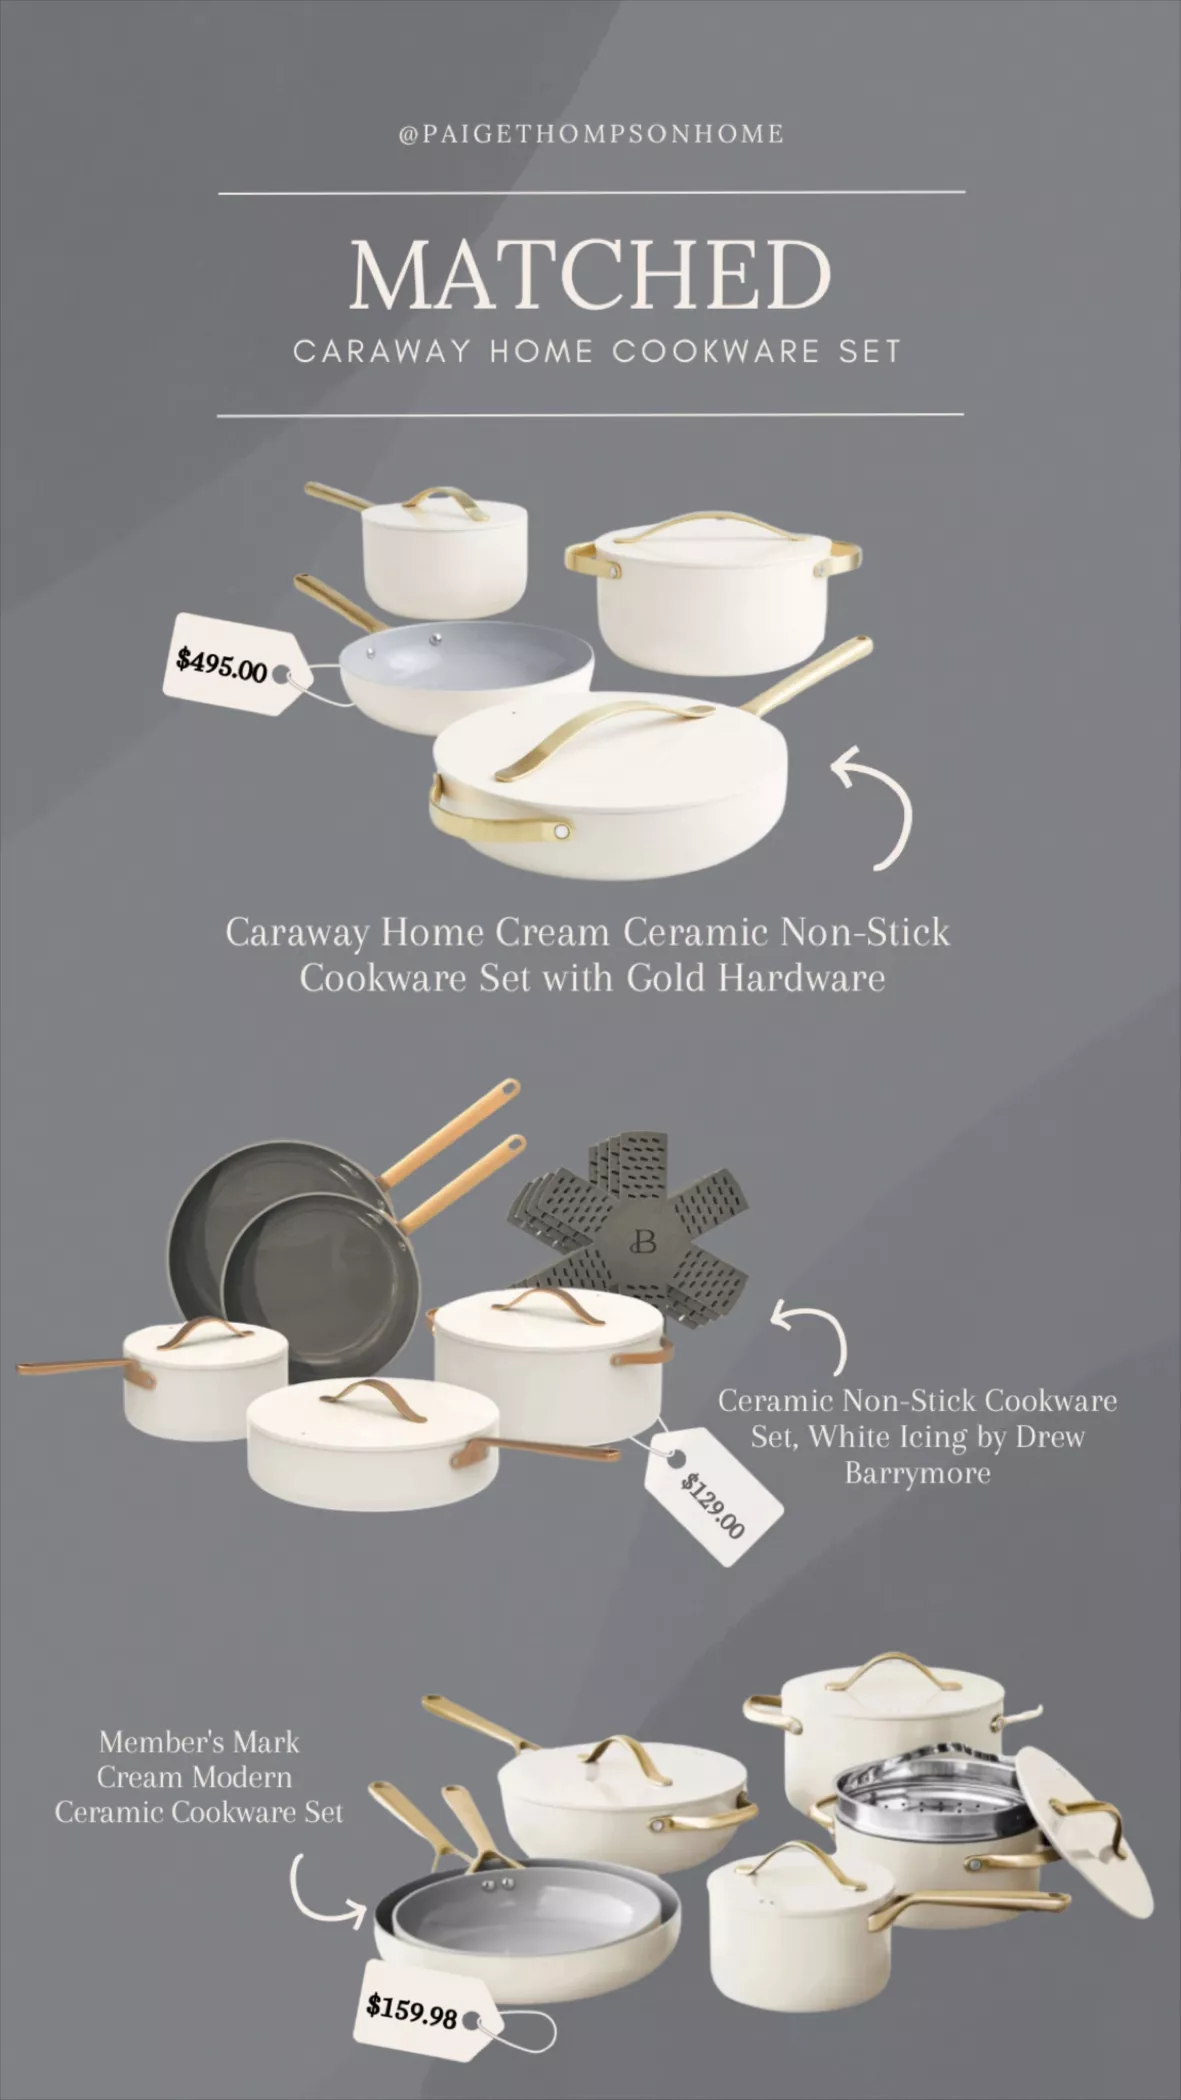 Member's Mark 11-Piece Modern Ceramic Cookware Set (Gray)